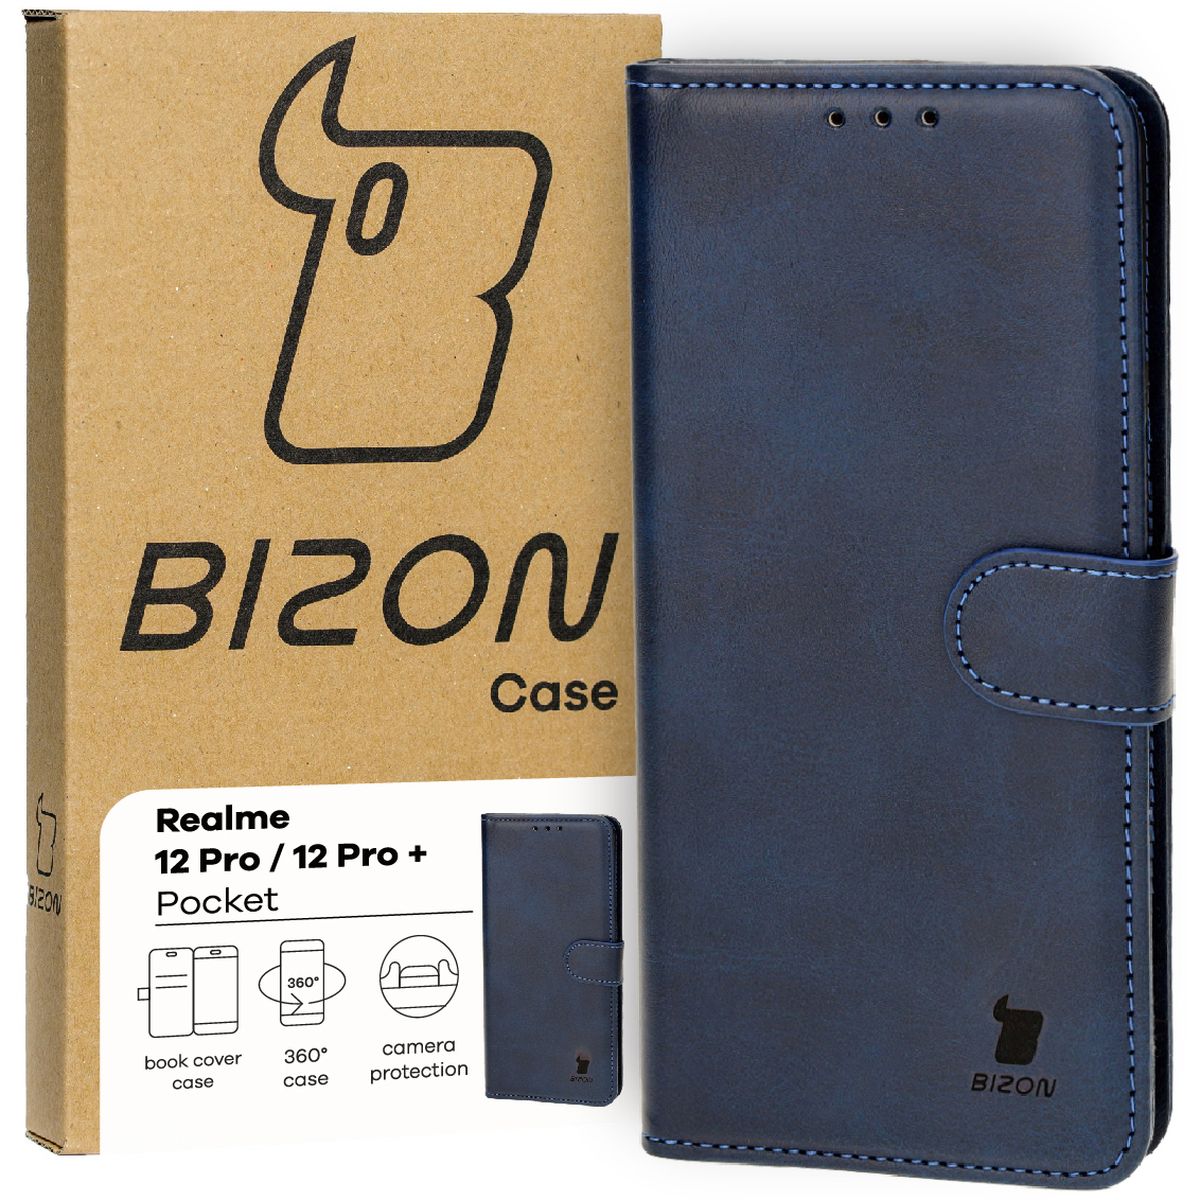 Schutzhülle für Realme 12 Pro / 12 Pro+, Bizon Case Pocket, Dunkelblau